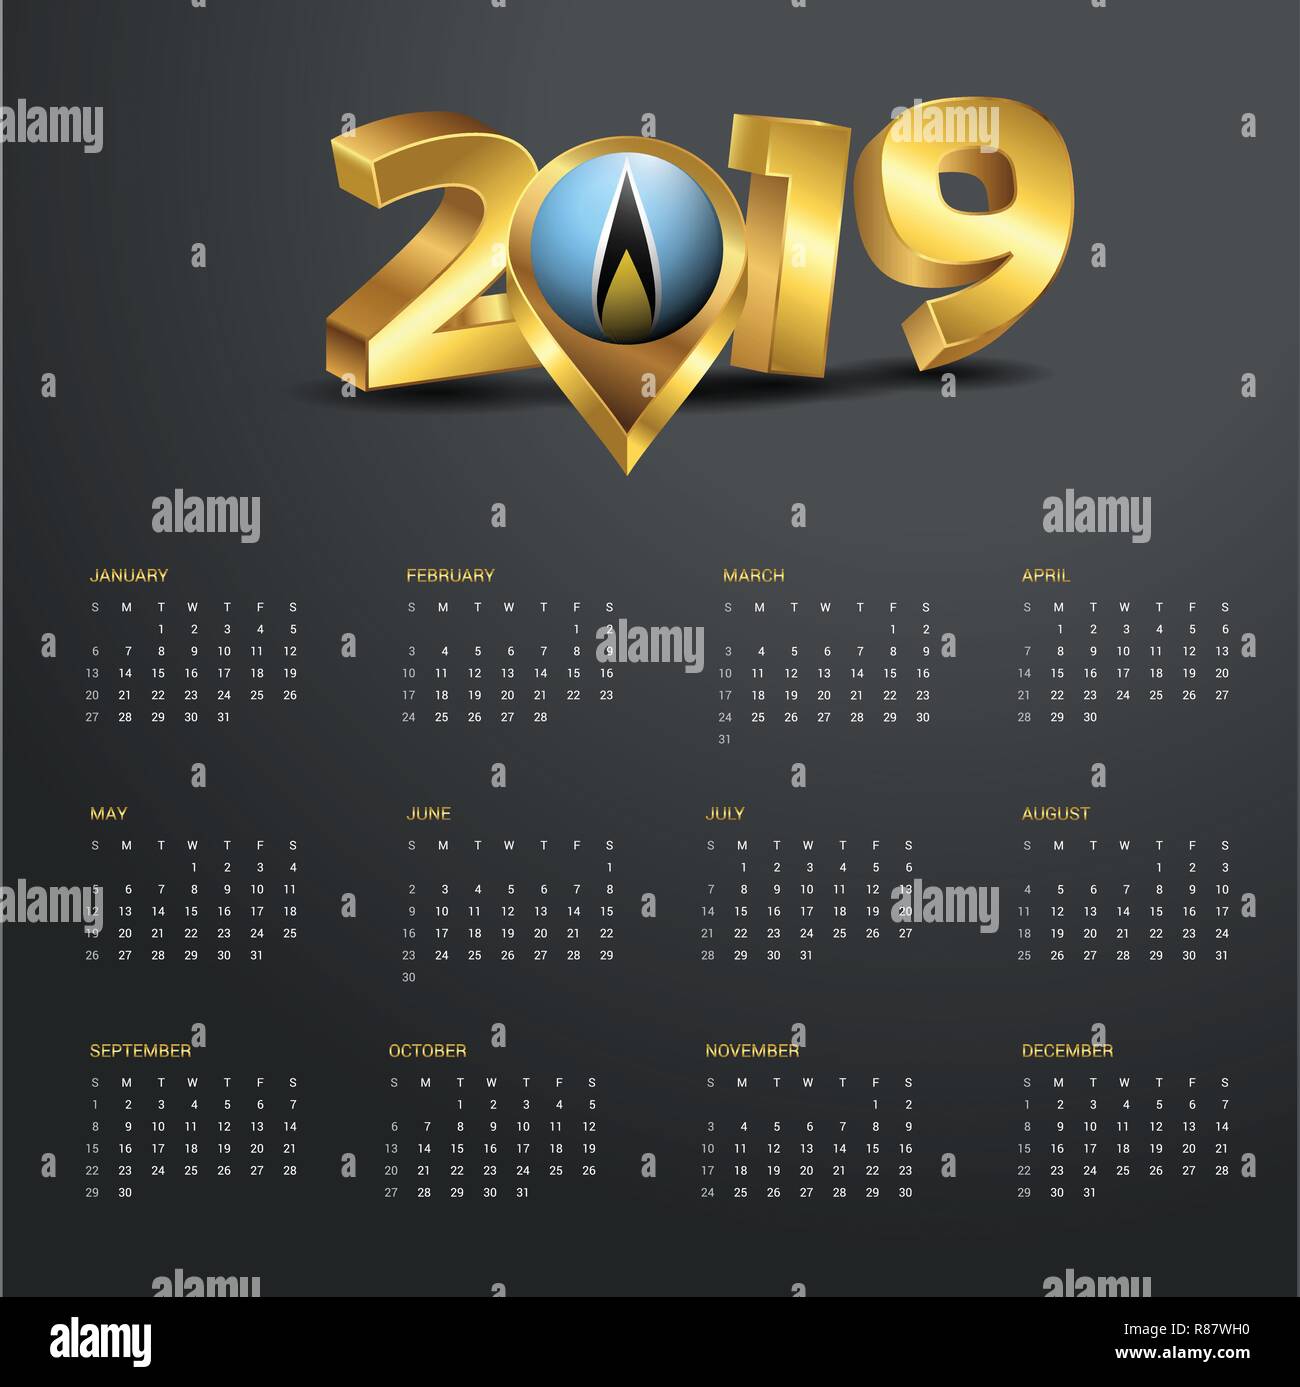 2019 Calendar Template. Saint Lucia Country Map Golden Typography Header Stock Vector